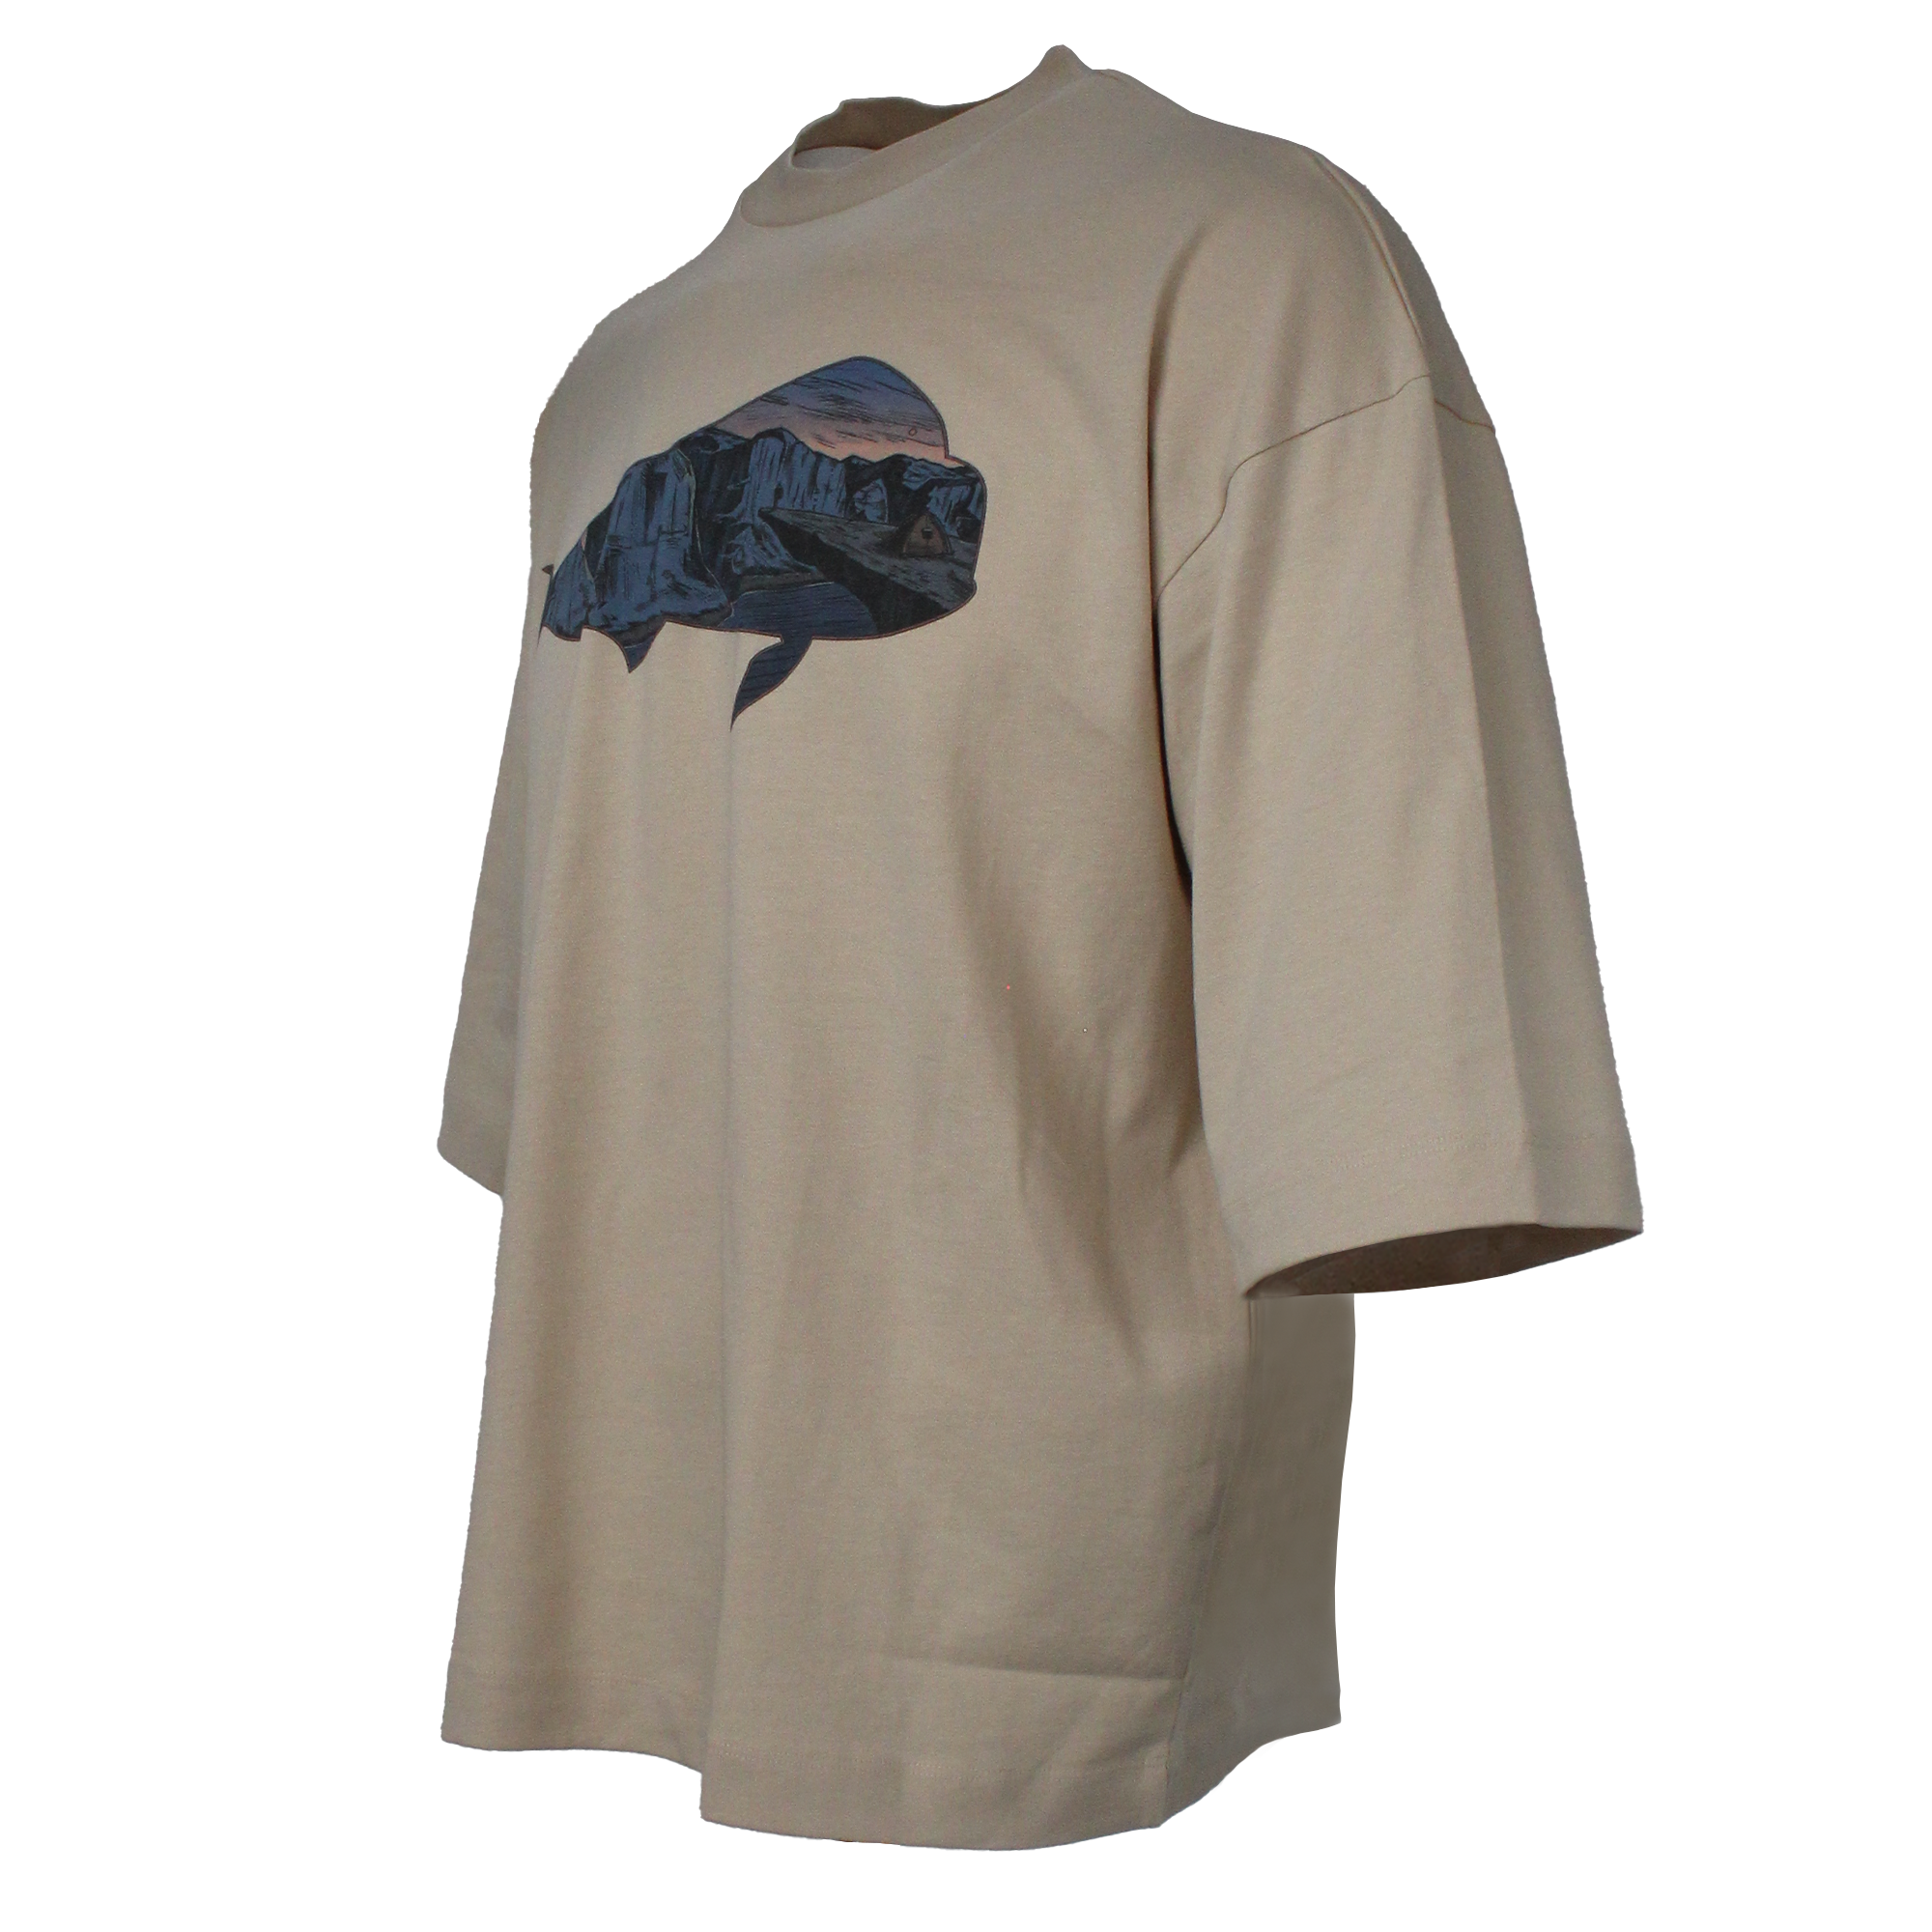 Bora Bora Loose T-Shirt - Mahi Mahi - Beige